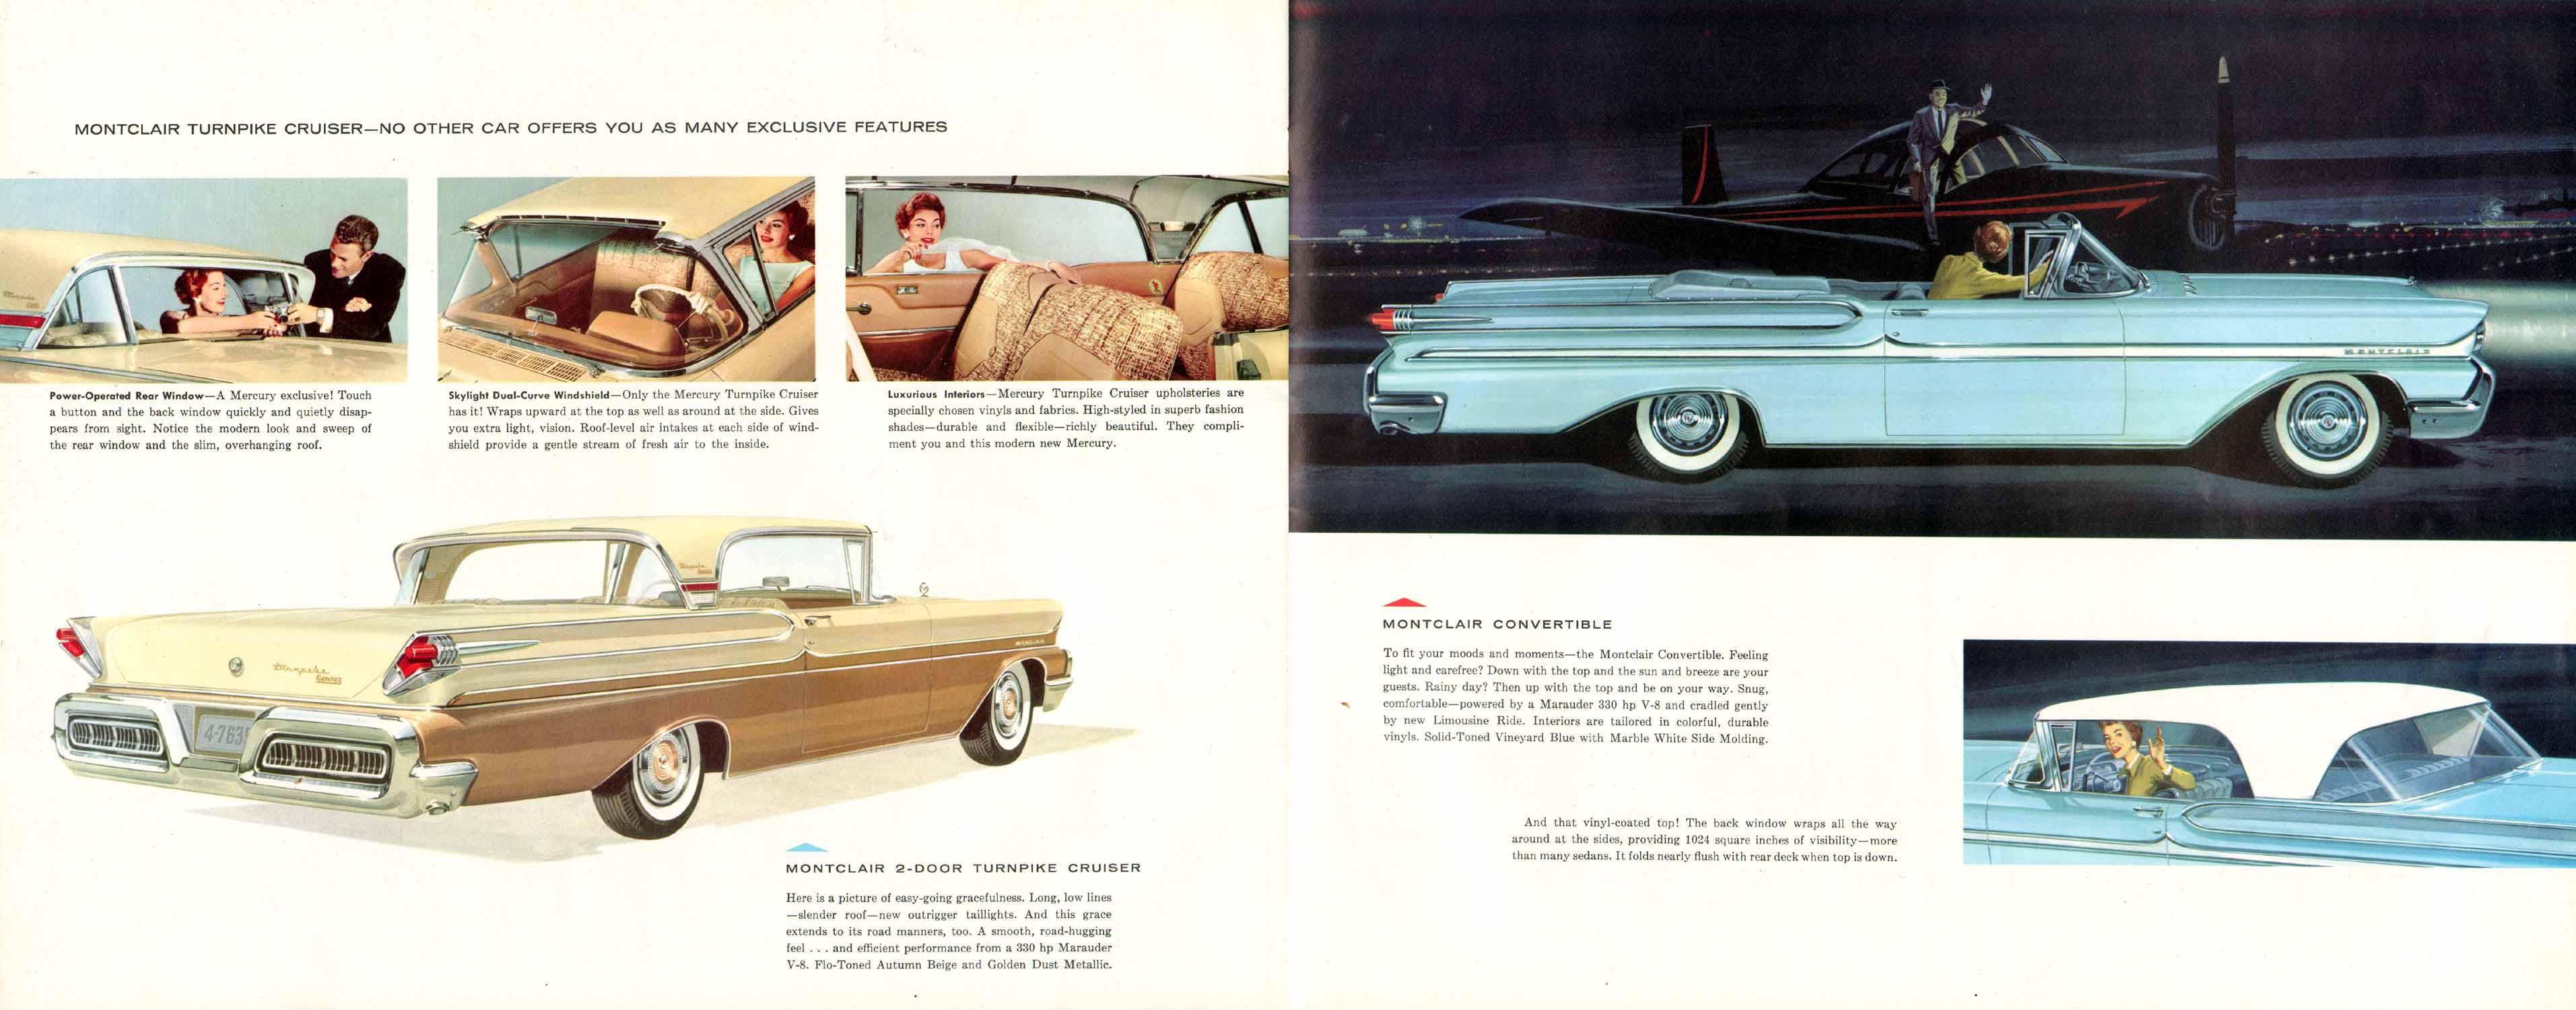 1958 Mercury Prestige-14-15